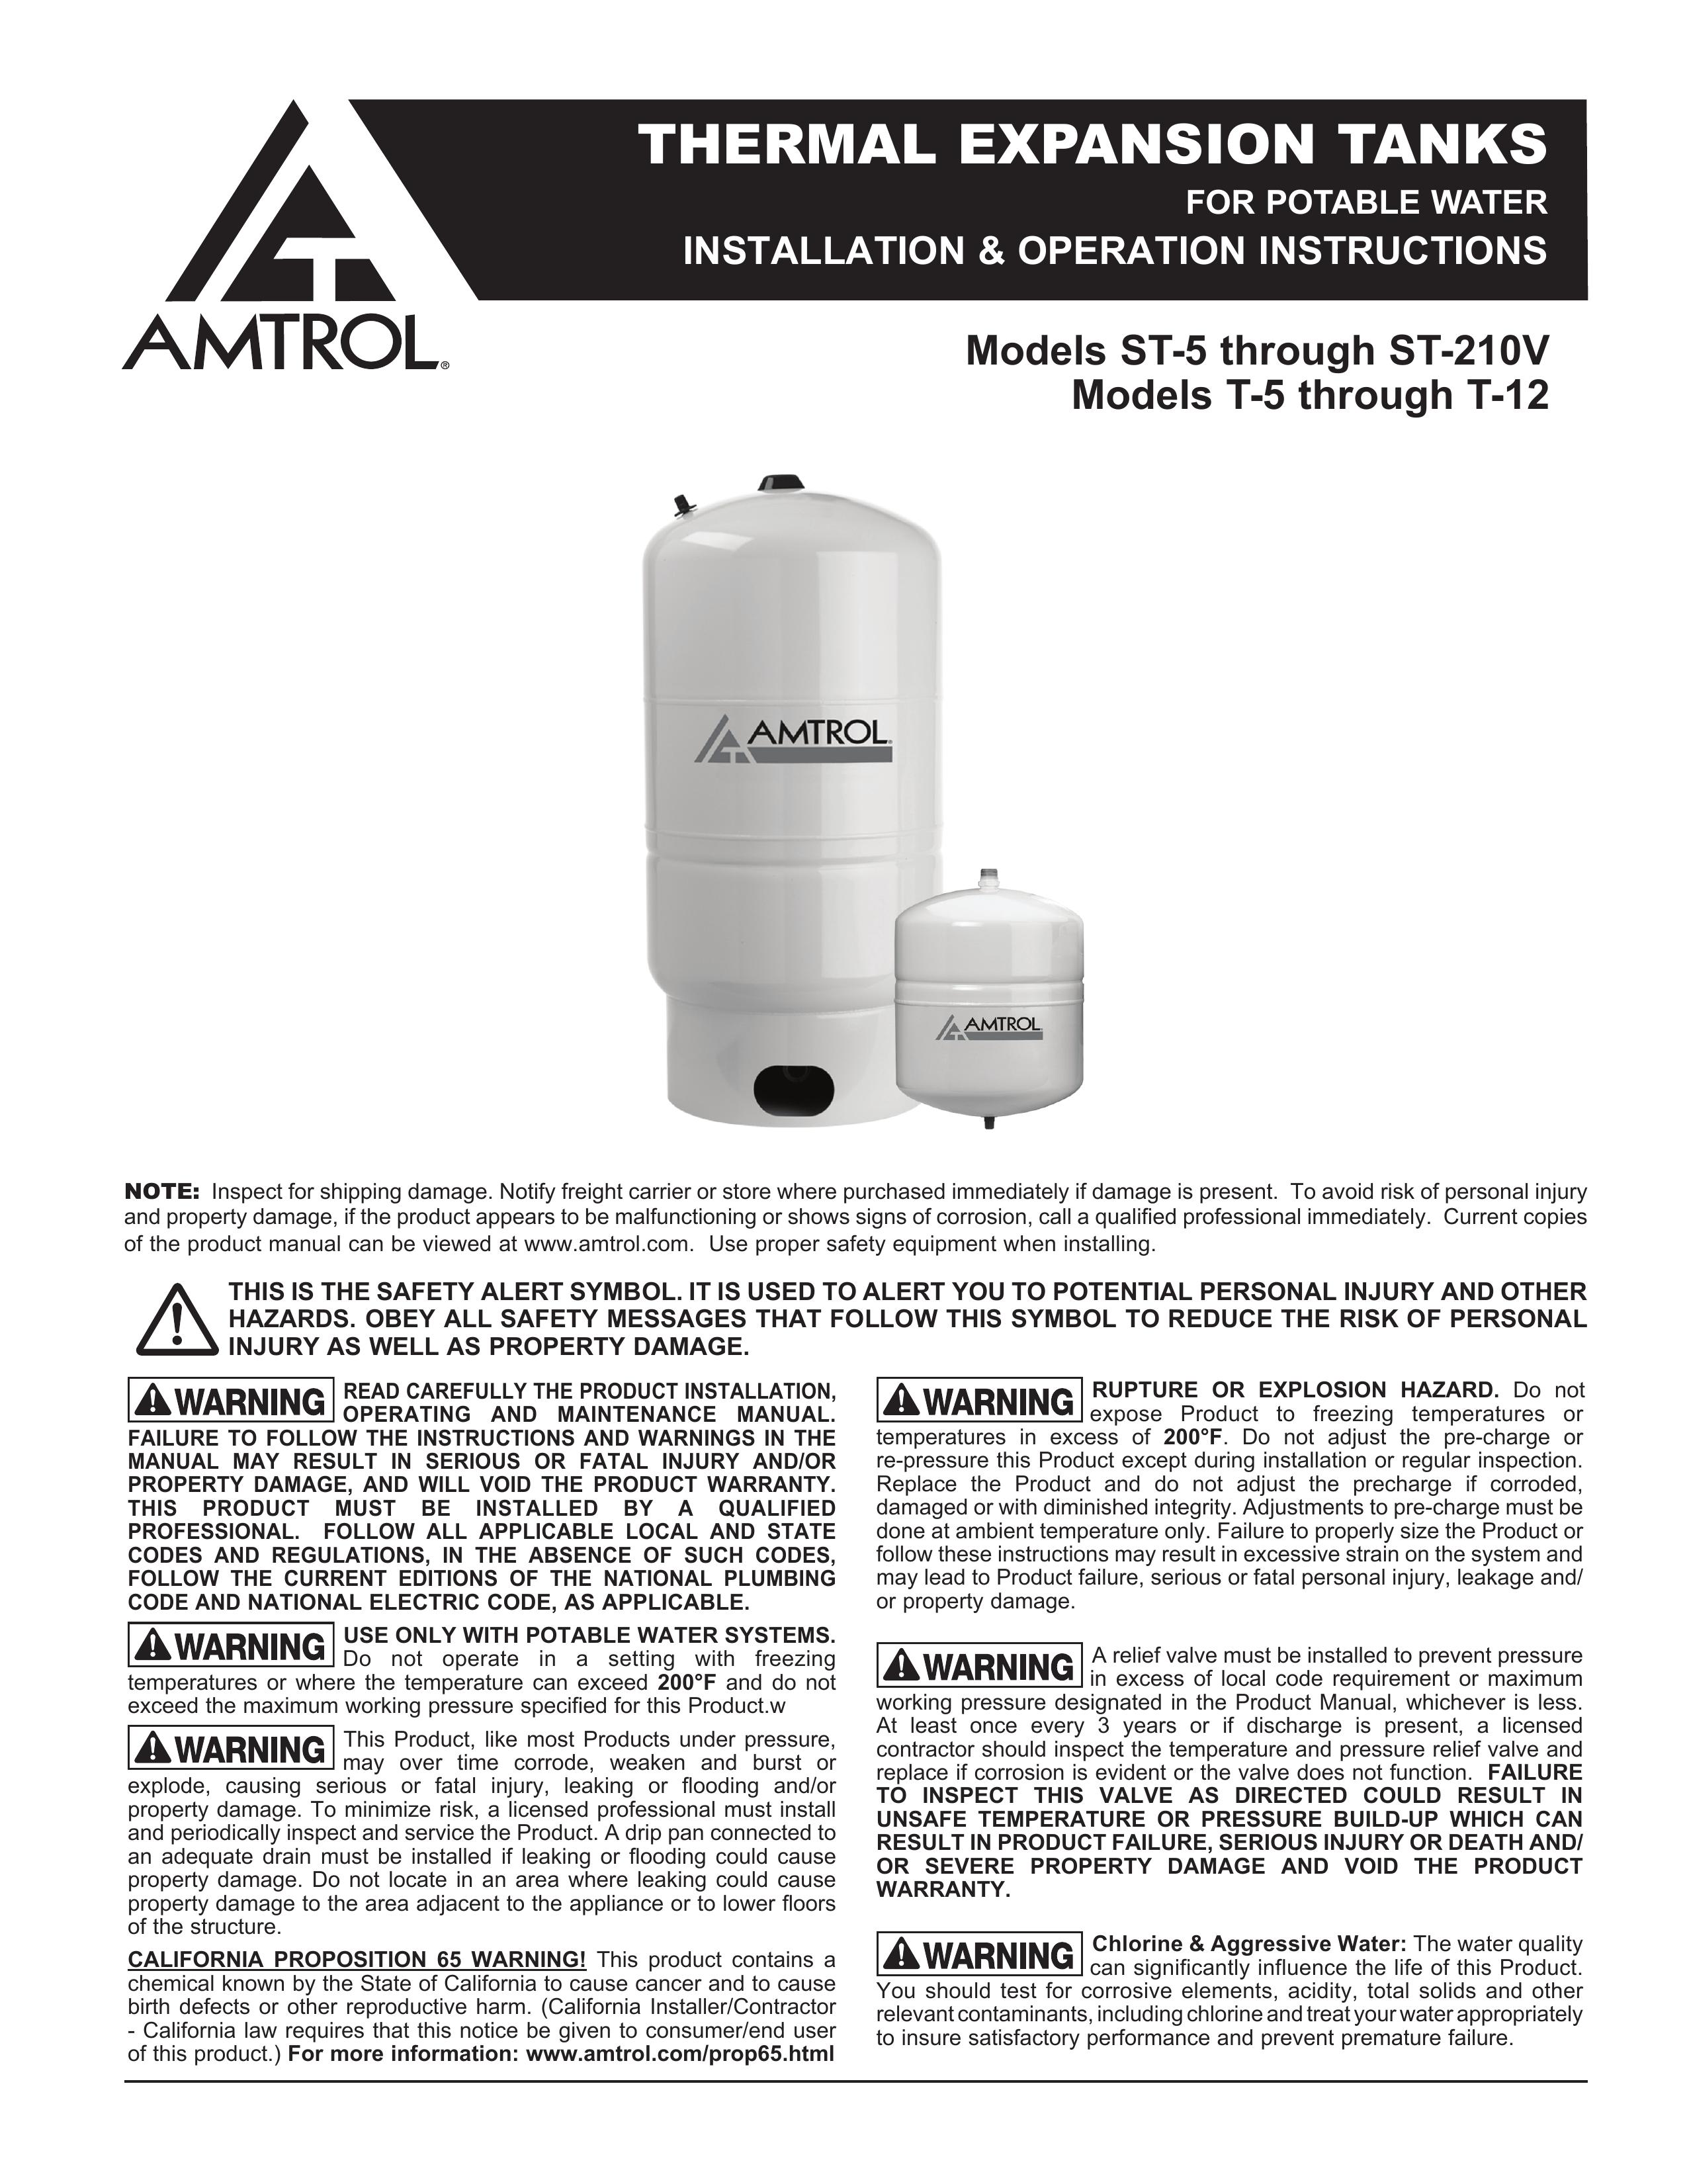 Amtrol ST-5 Marine Sanitation System User Manual